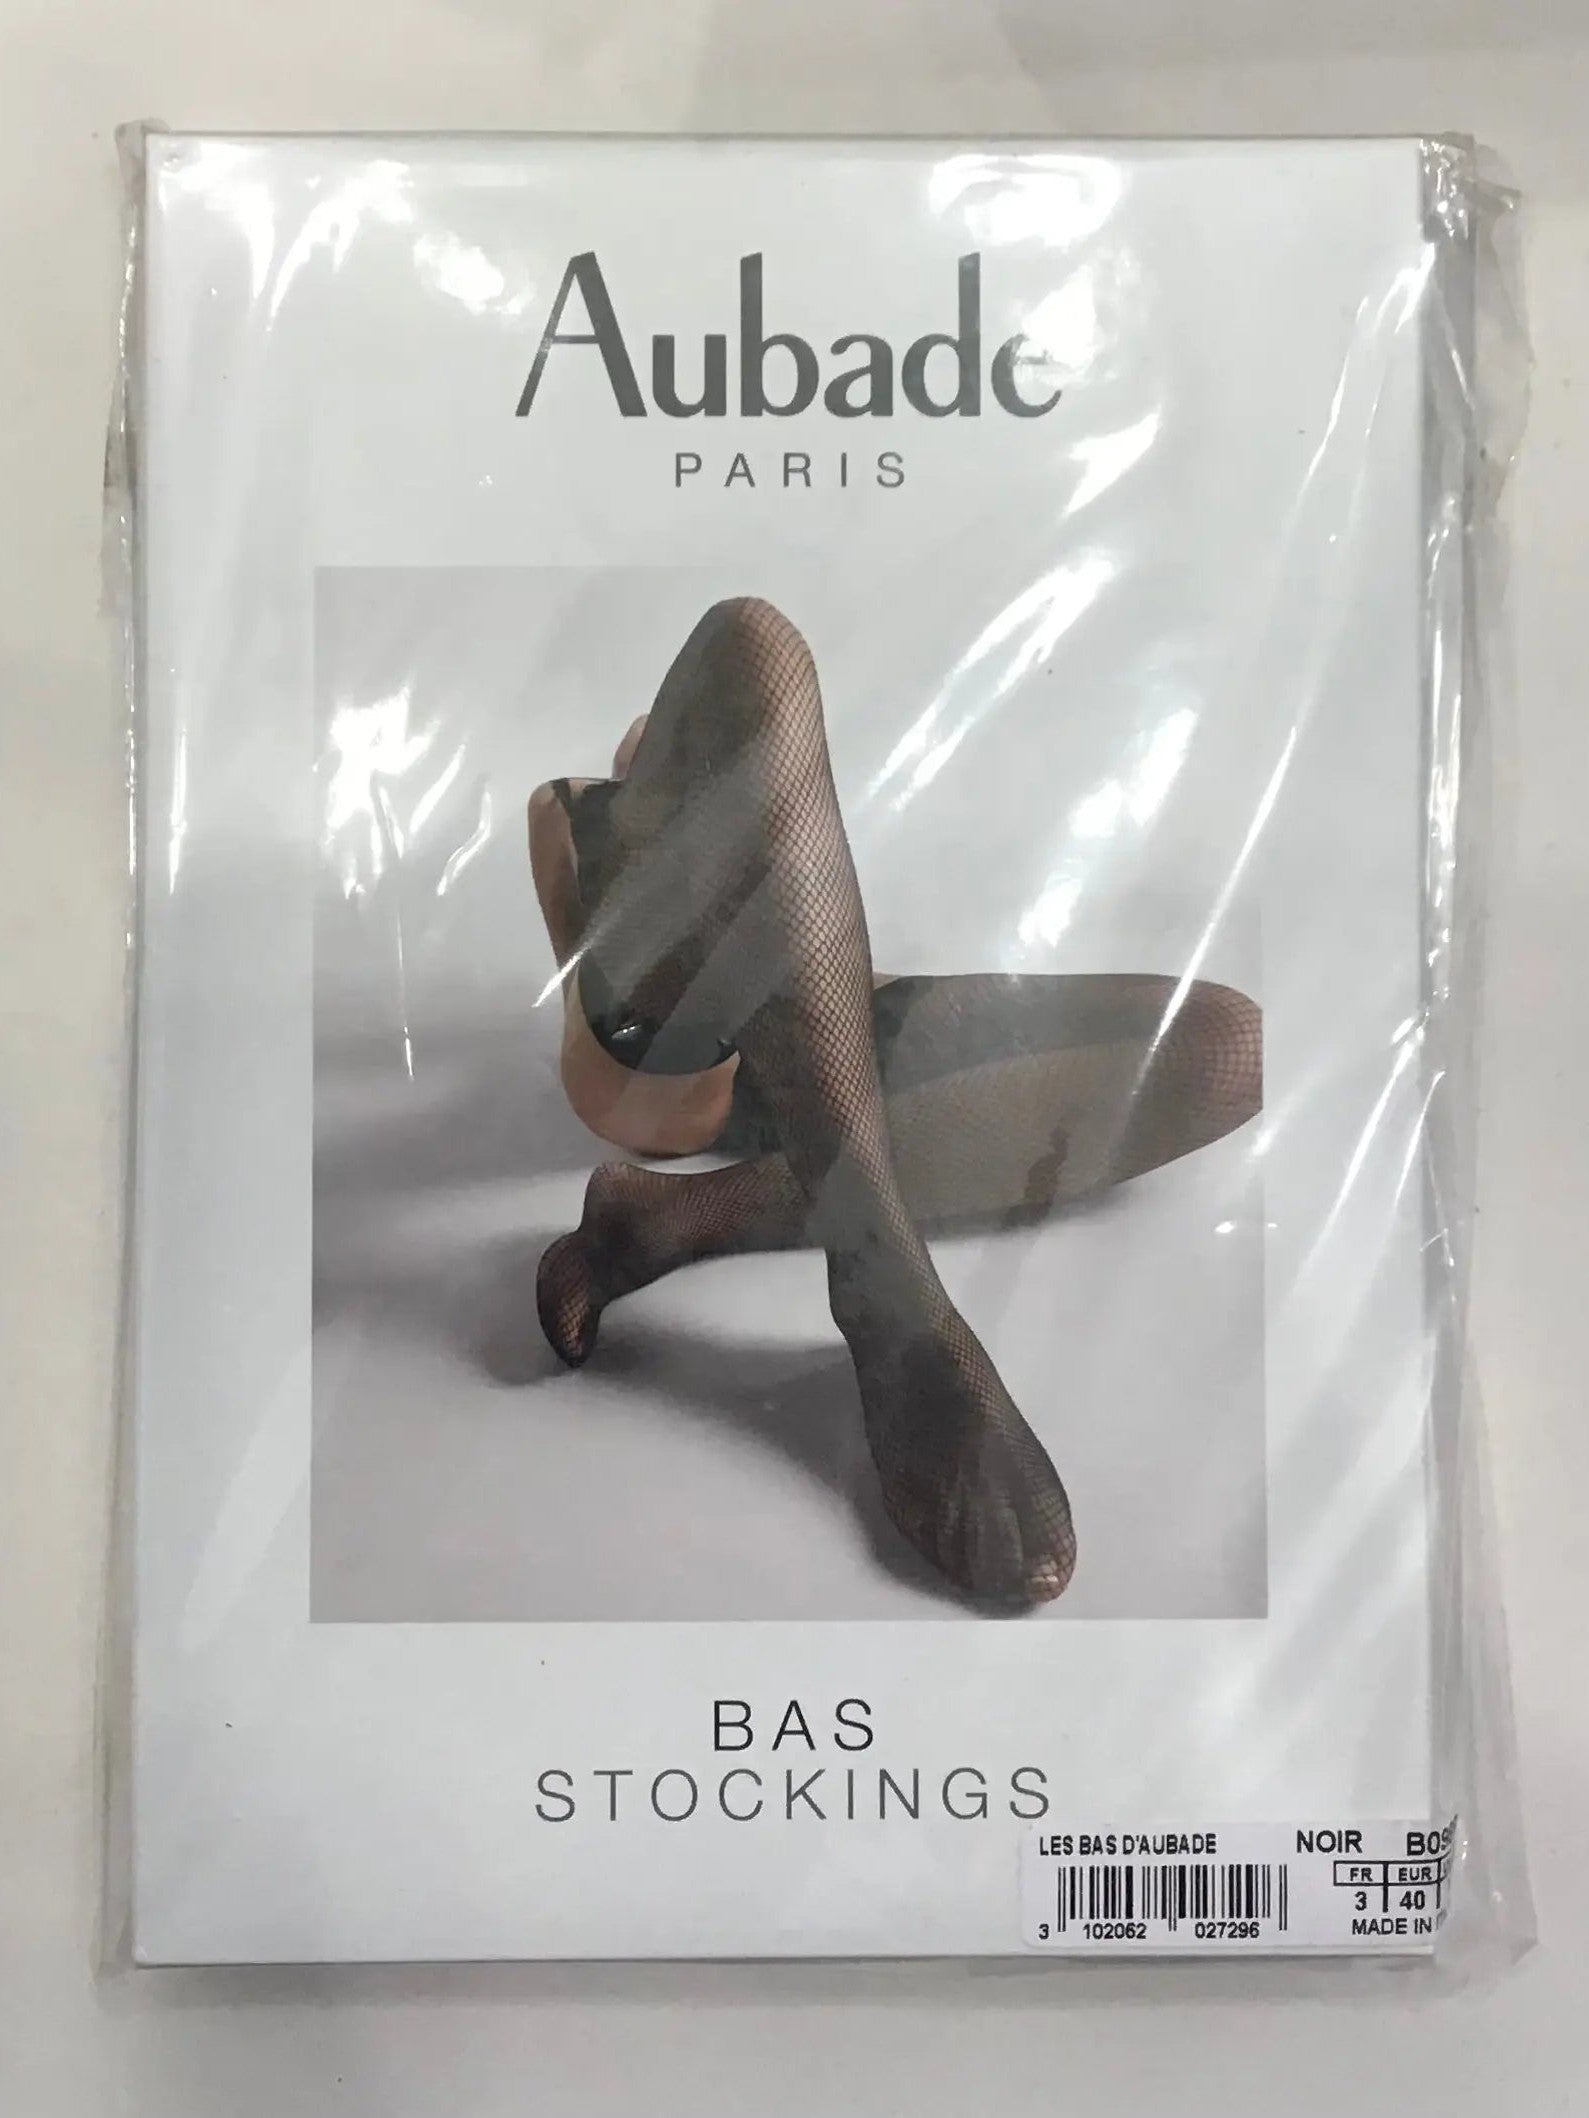 Aubade Black Fishnet Stay-Up Stockings